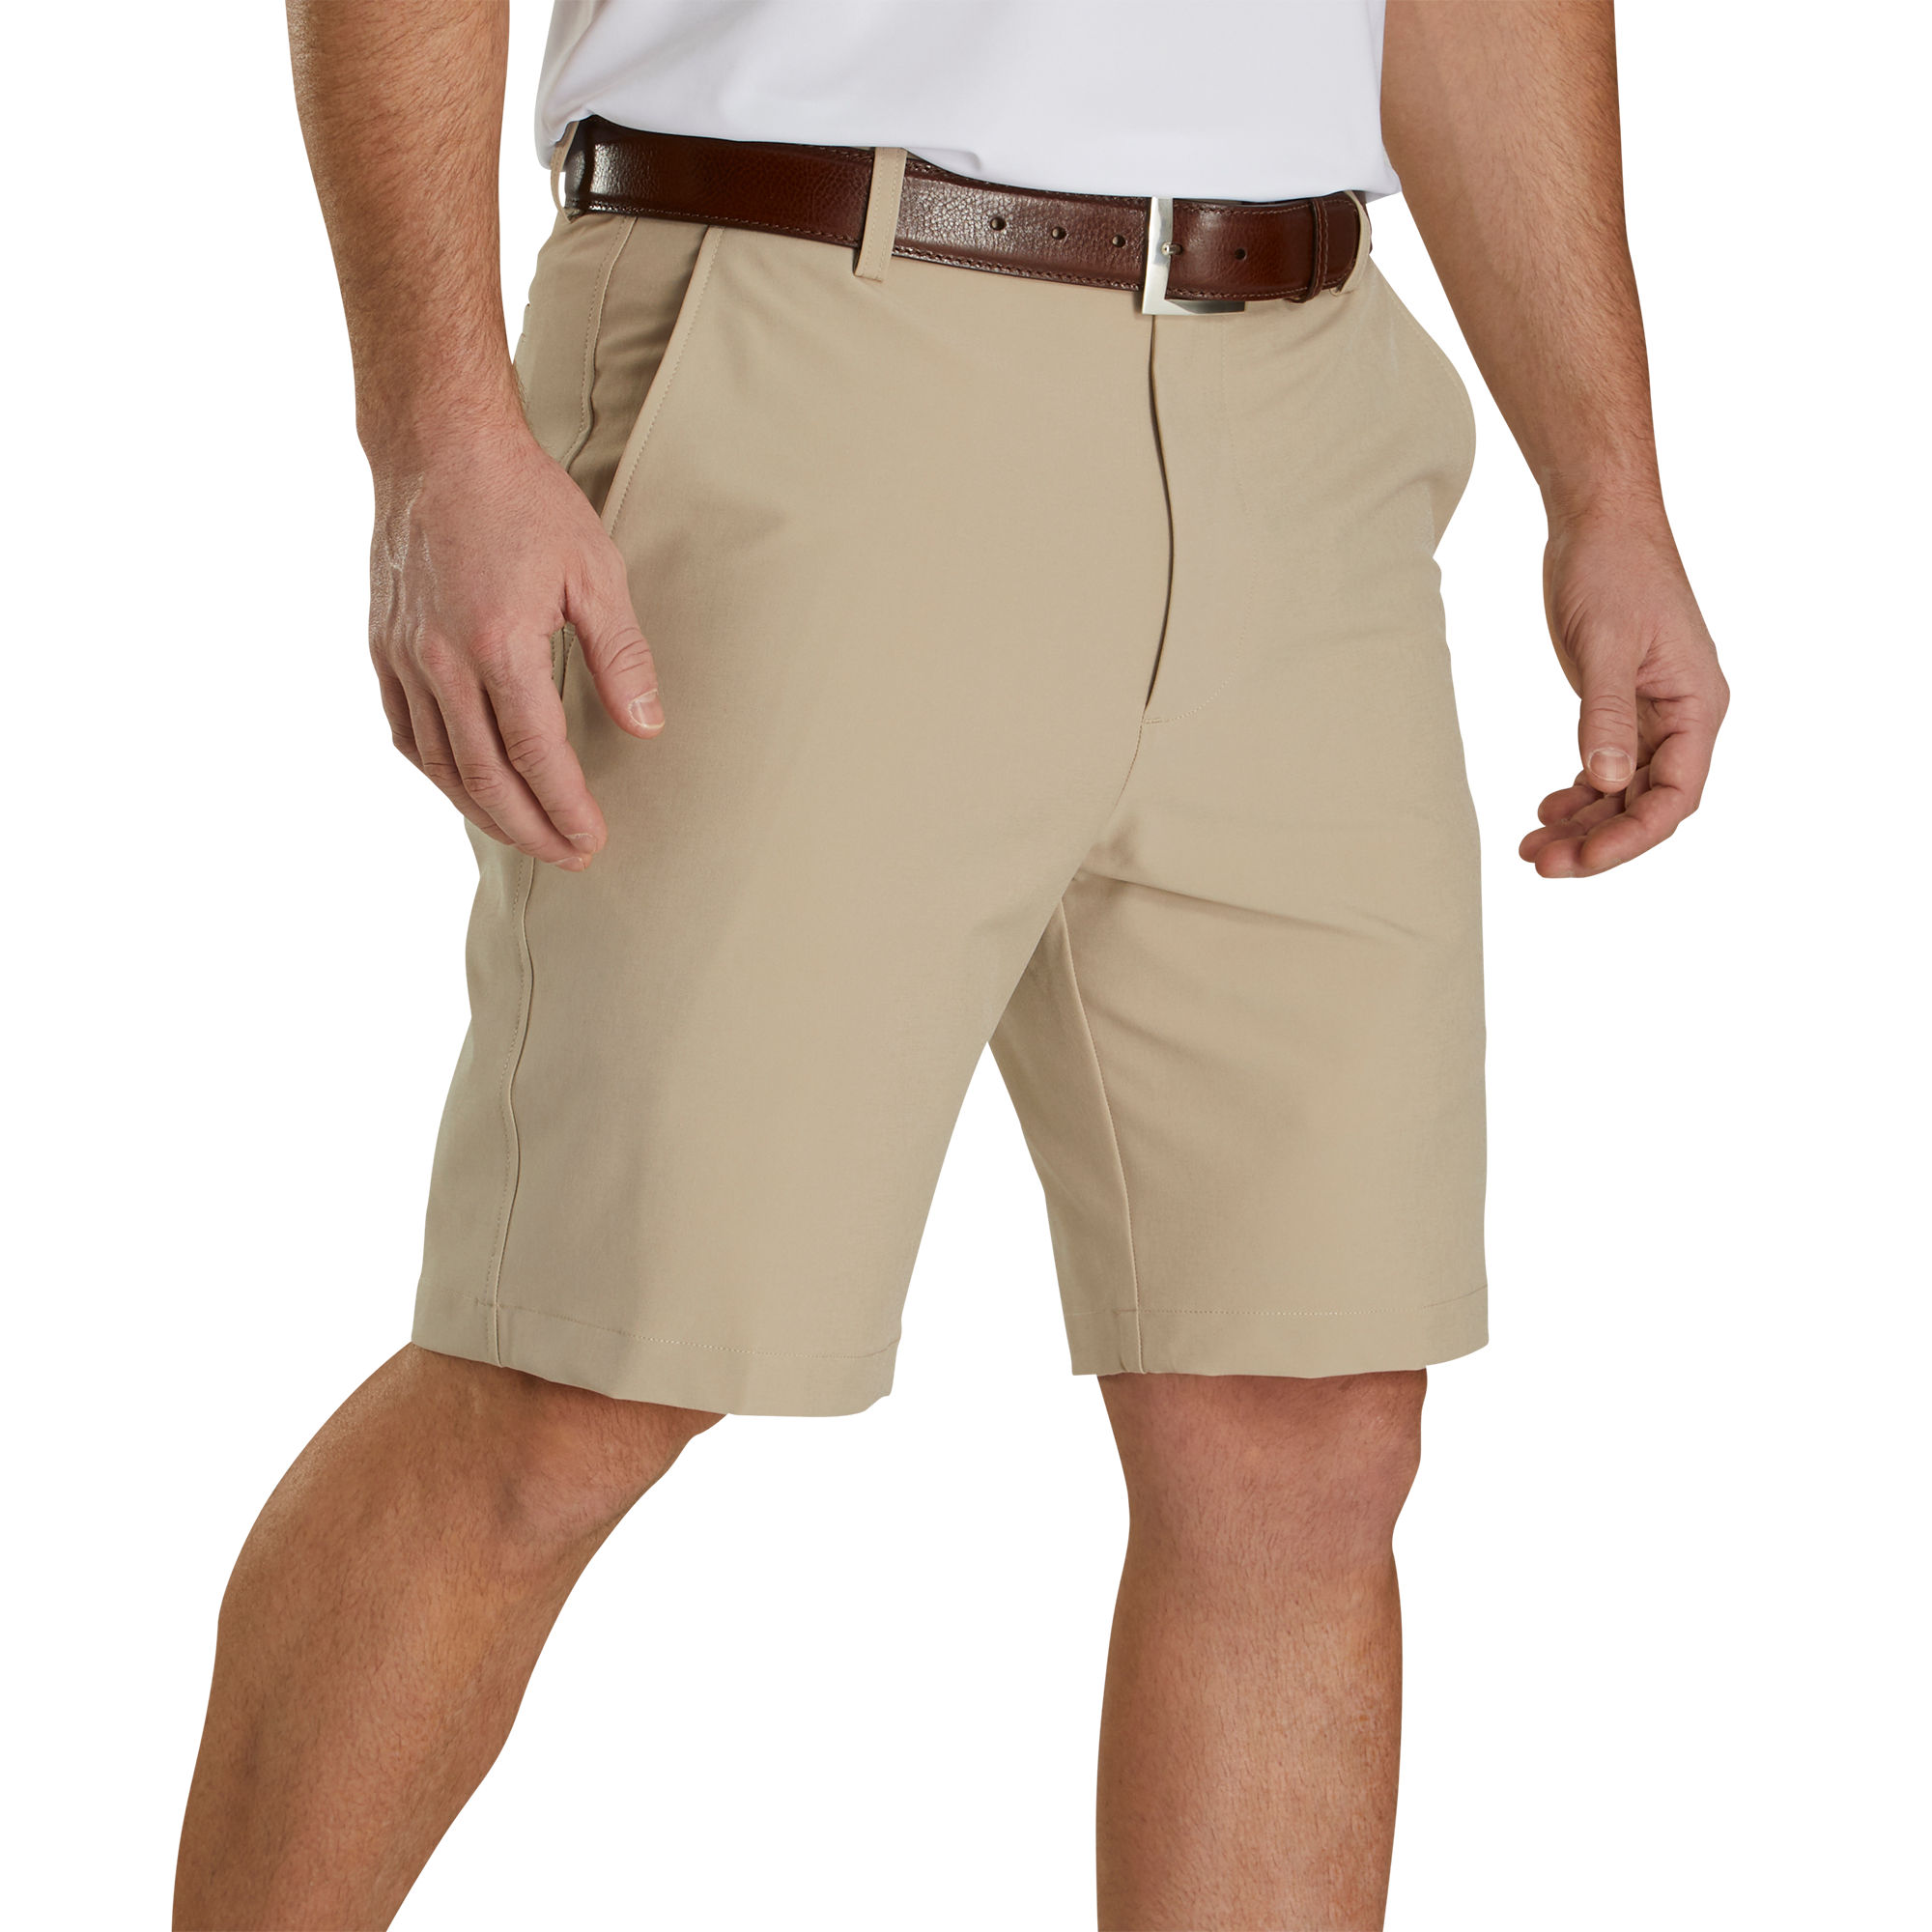 Flat Front Shorts 9.5 Inseam